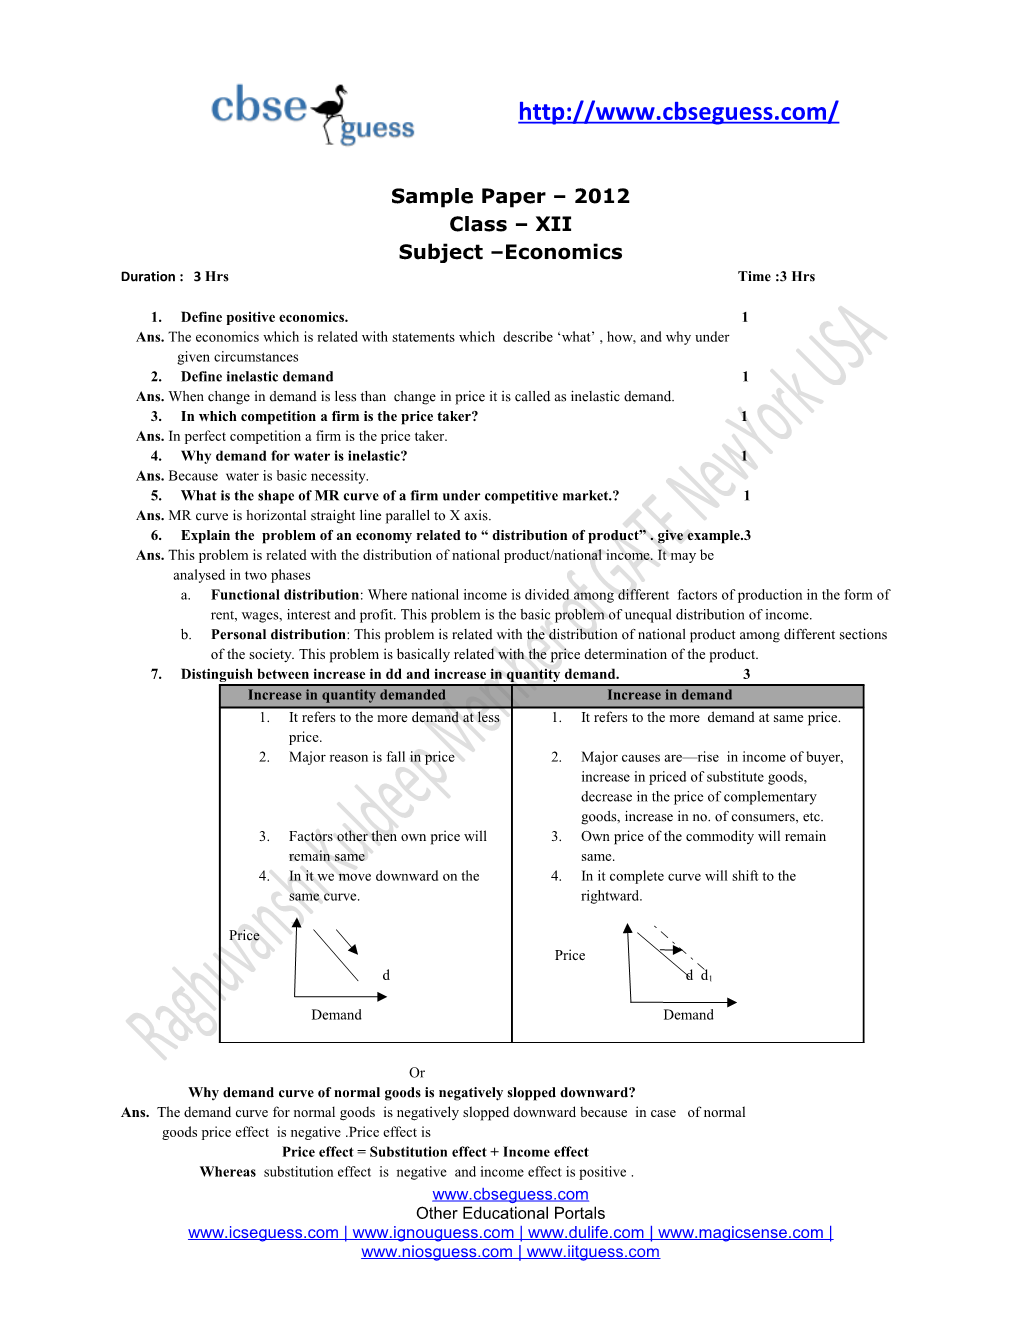 Sample Paper 2012 Class XII Subject Economics